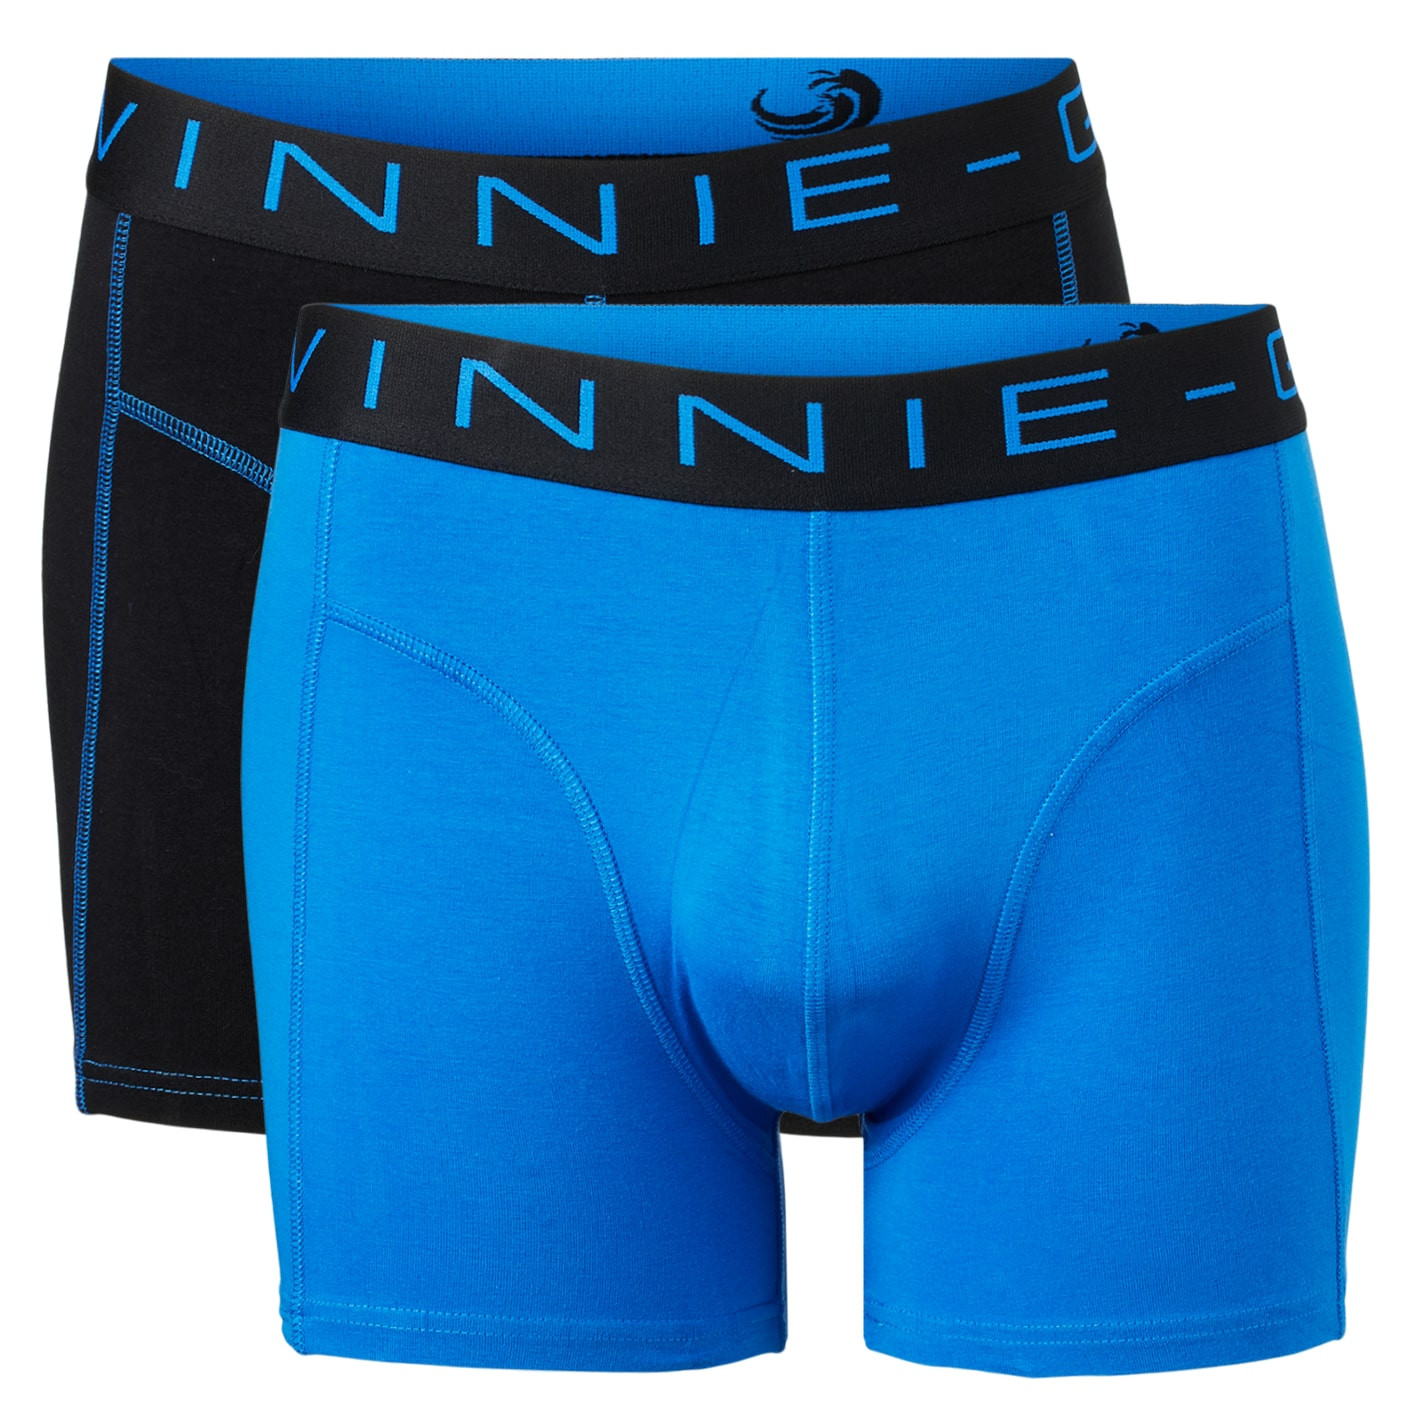 Vinnie-G Boxershorts 2-pack Black Blue / Blue